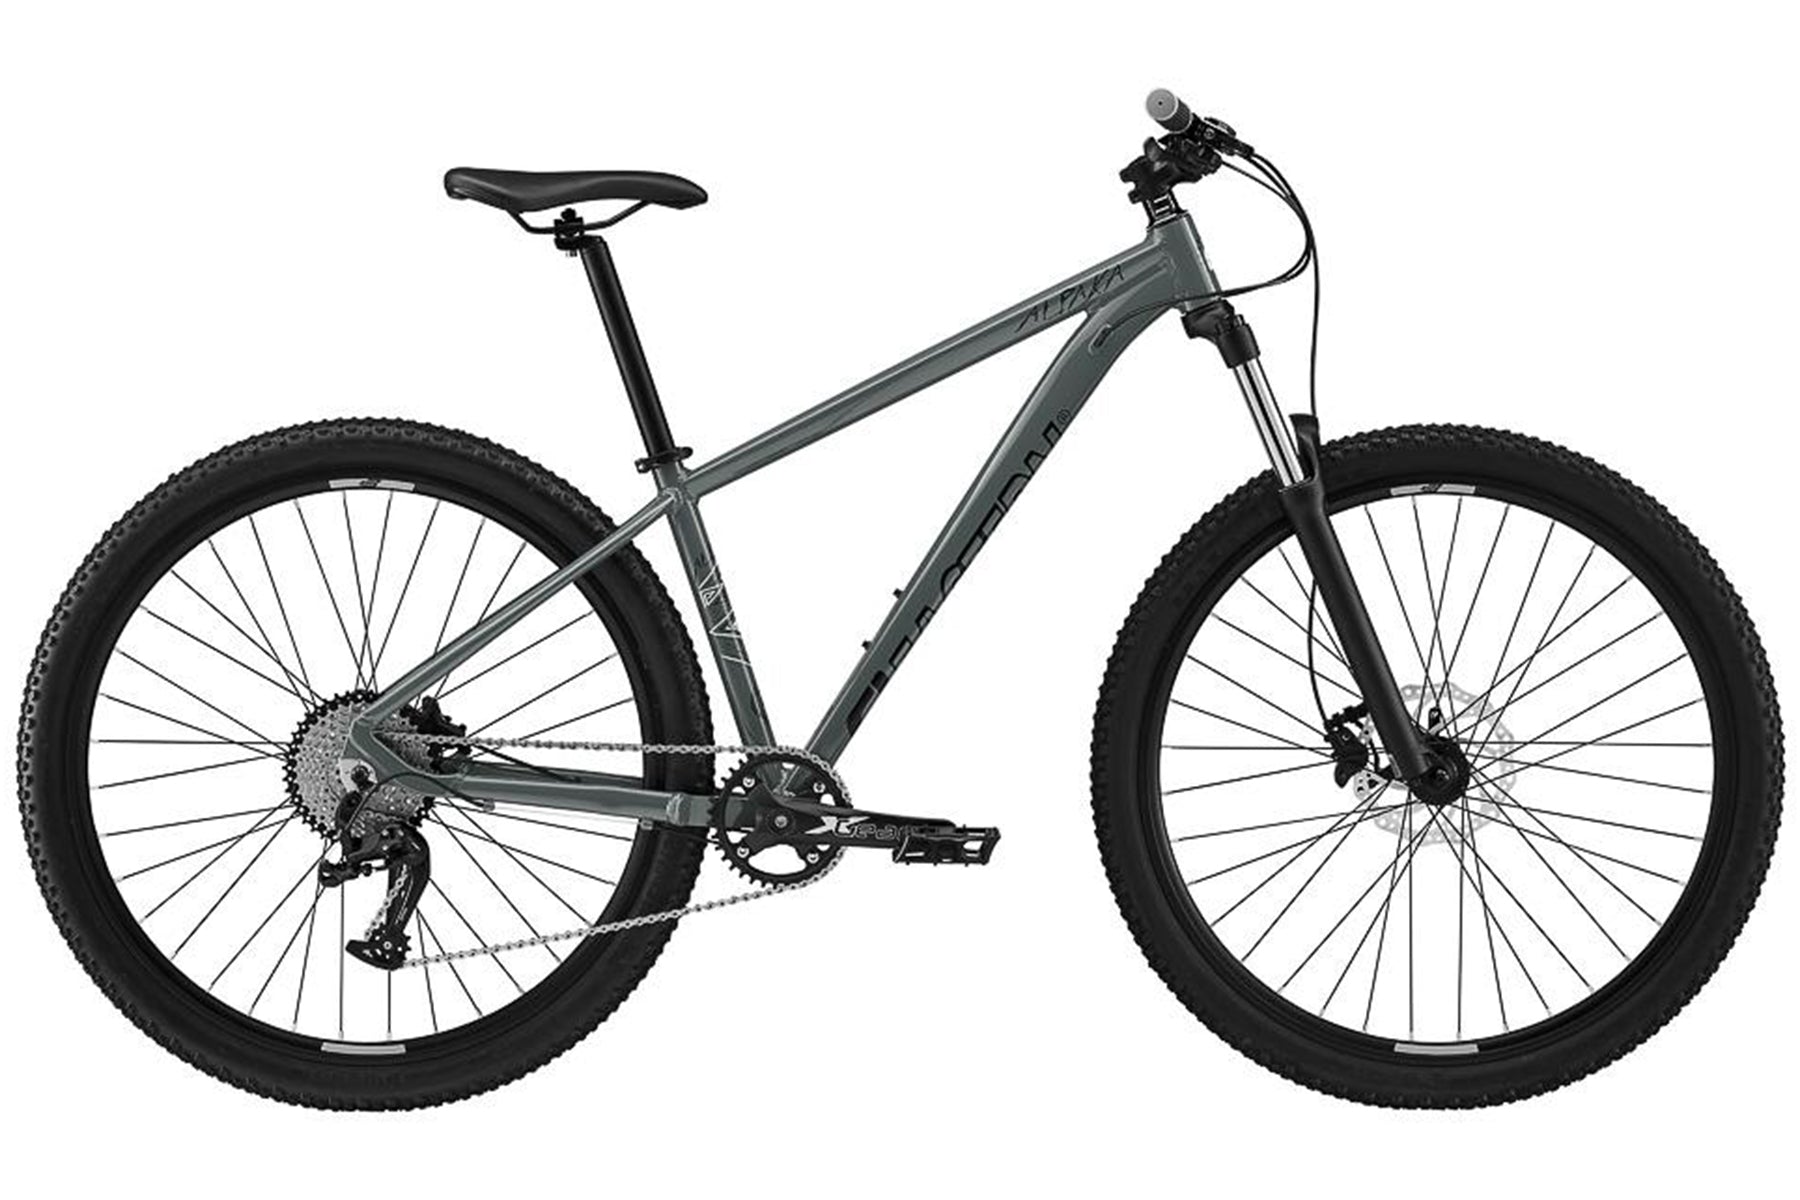 Eastern Alpaka 29 MTB Hardtail Bike - Gray Gray Small 